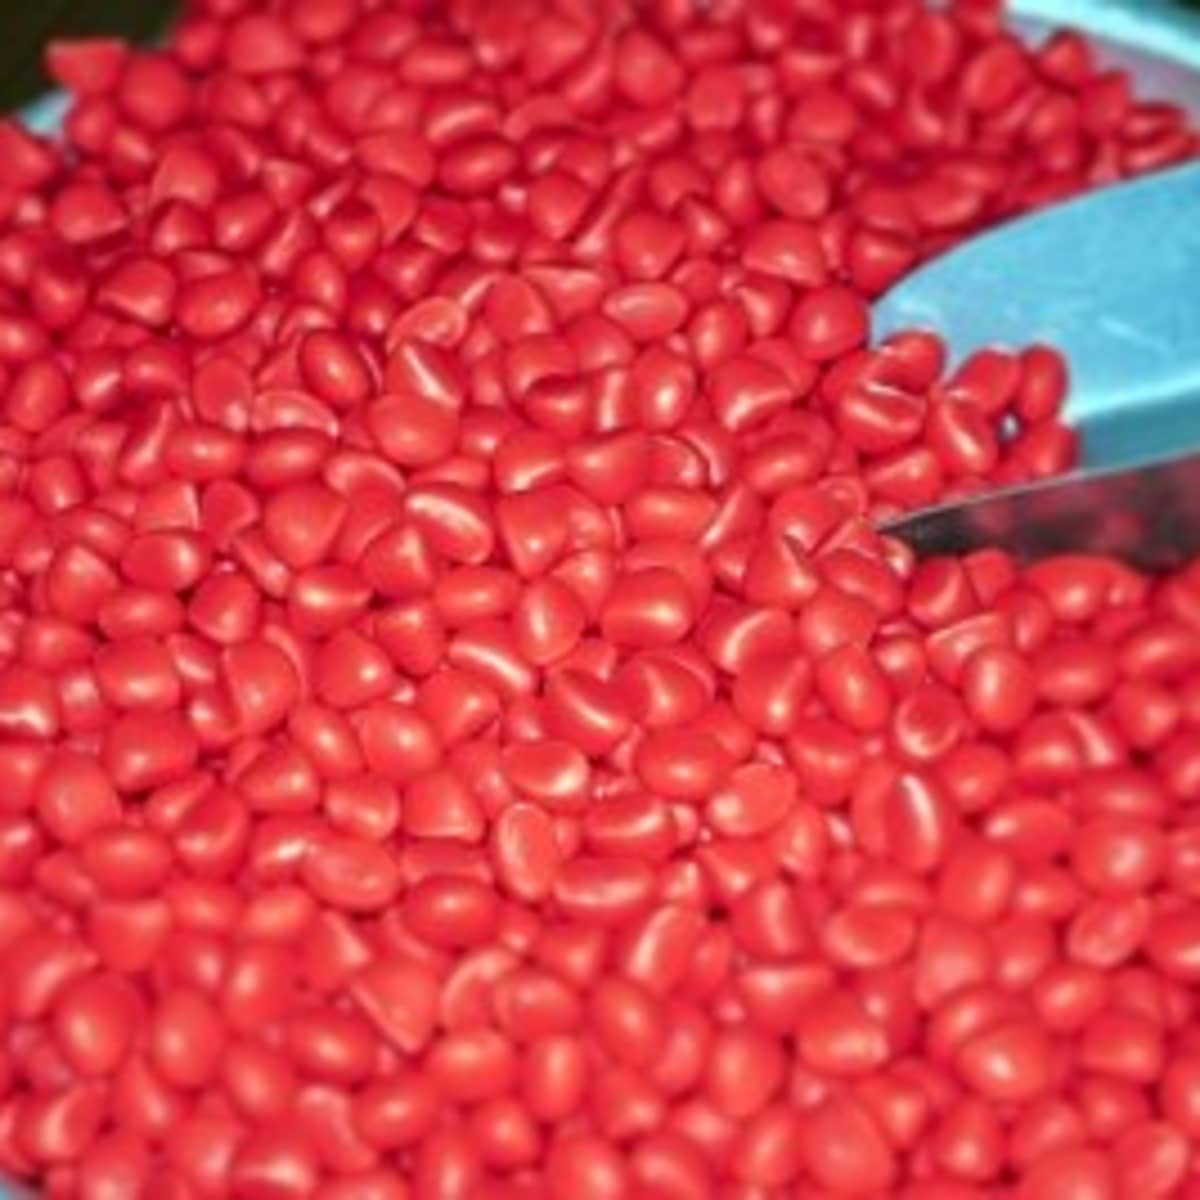 Red Dye #40: A Hazardous Food Additive - Delishably